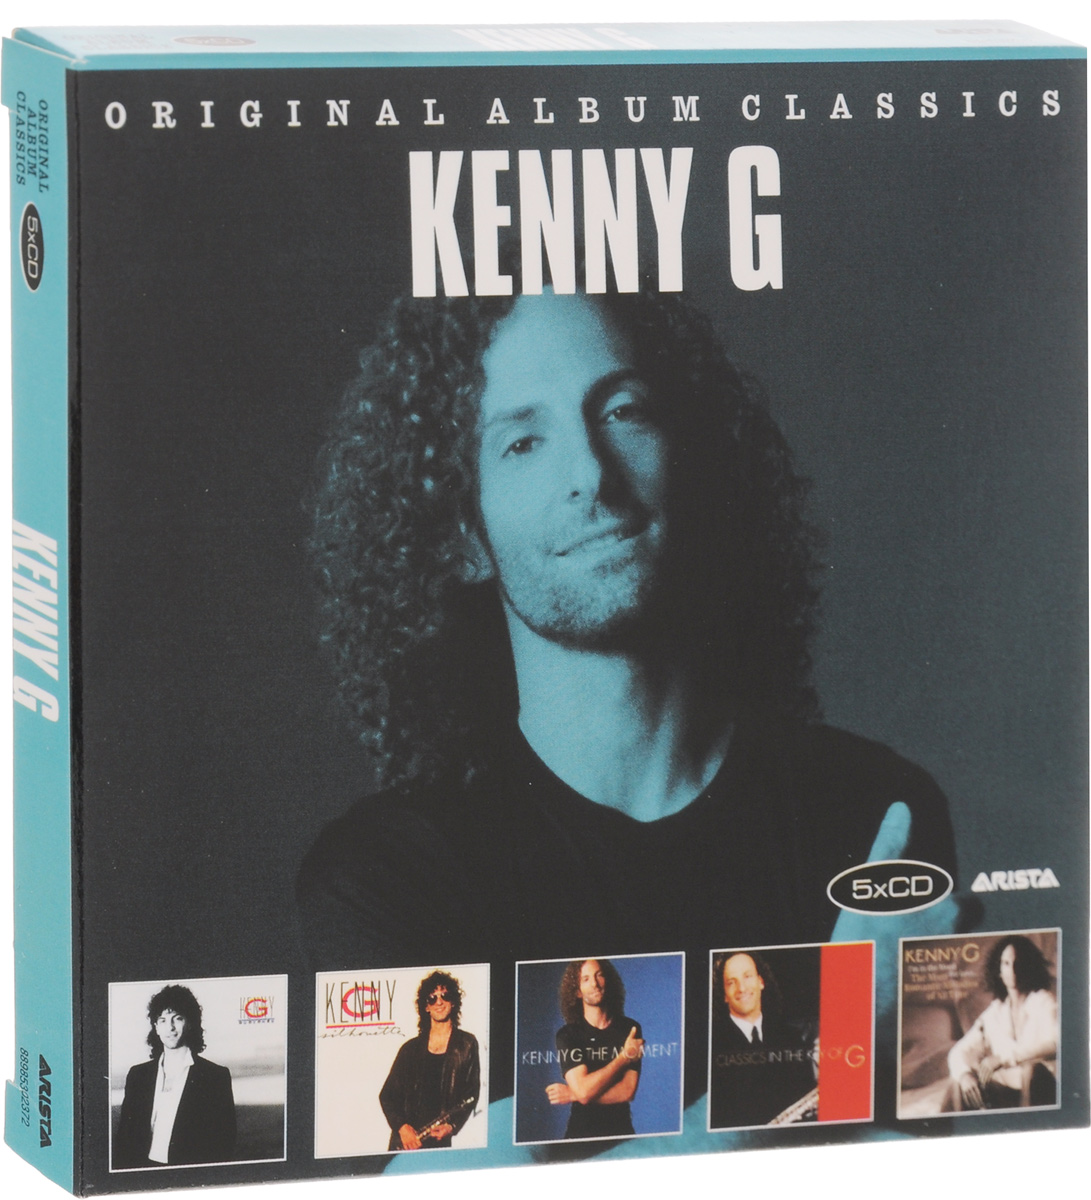 Диск джей. Kenny g CD. Kenny g.